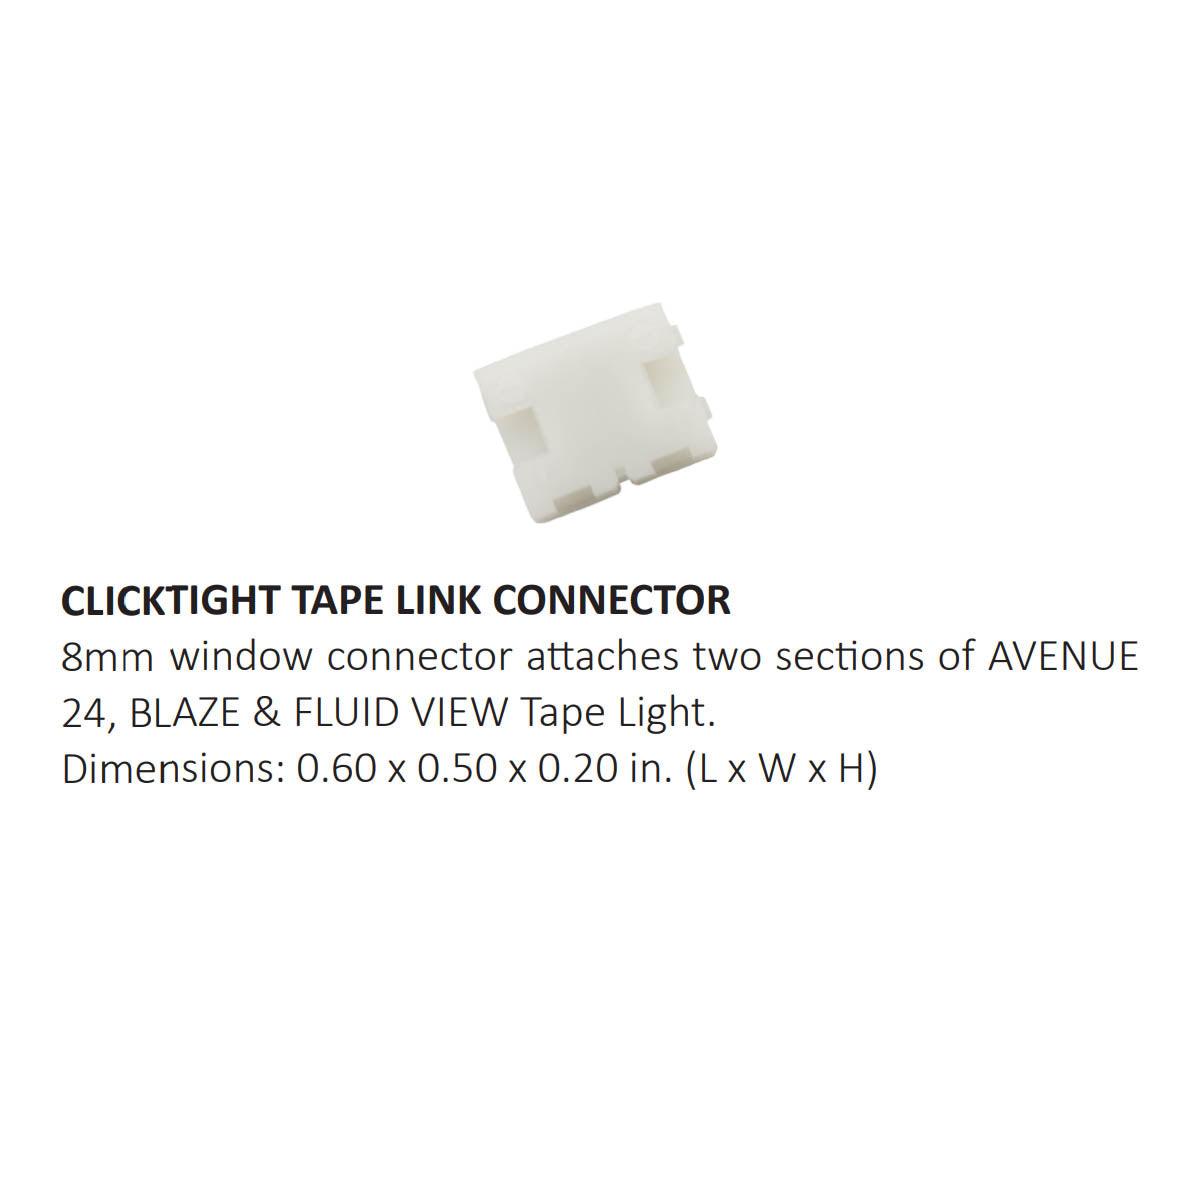 ClickTight Tape Link Connector for Blaze LED Tape Lights